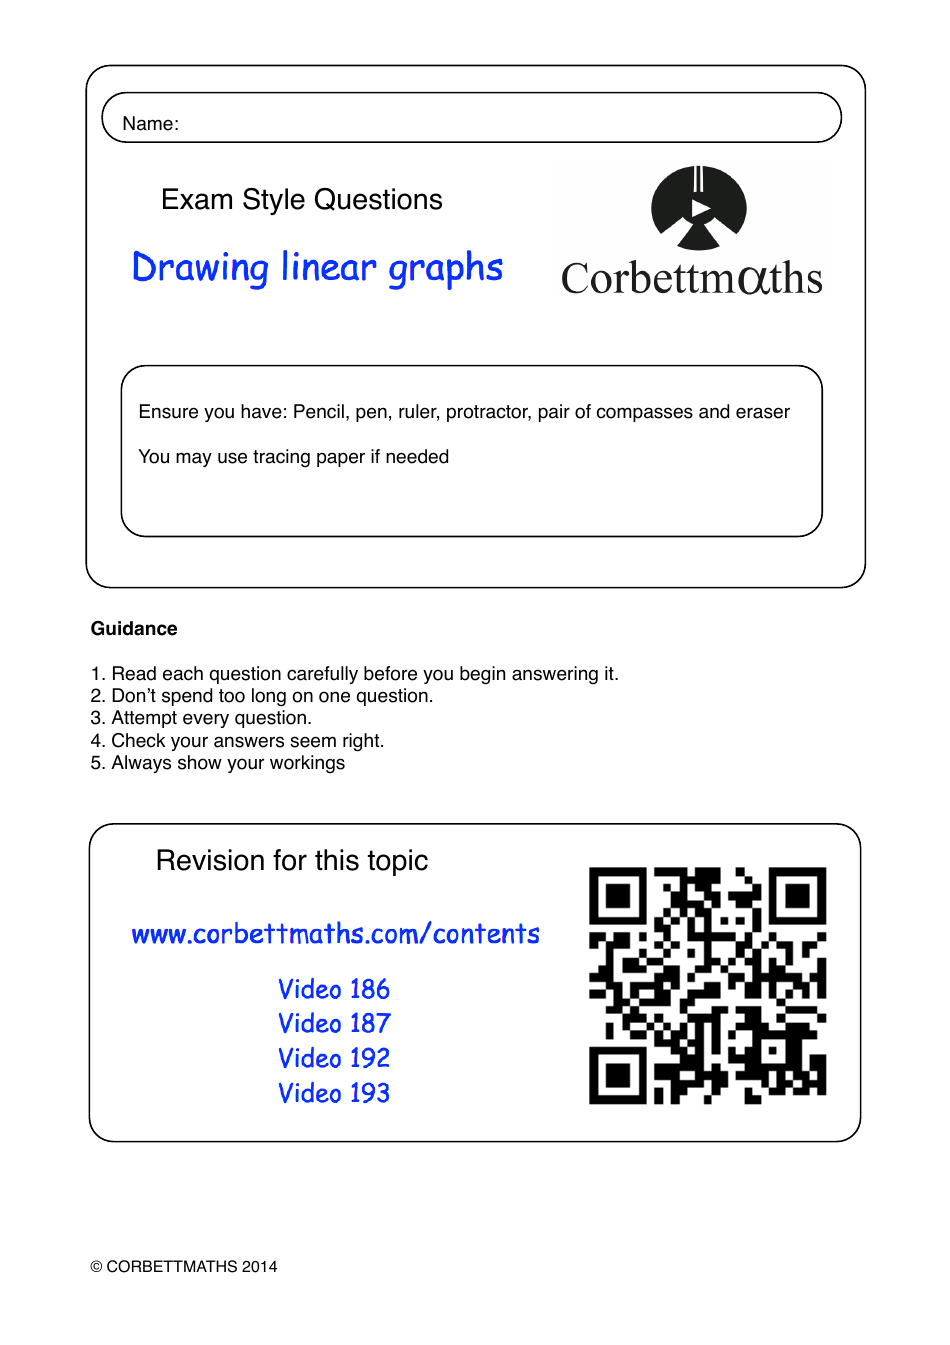 Drawing Linear Graphs - Corbettmaths Math Exam Questions